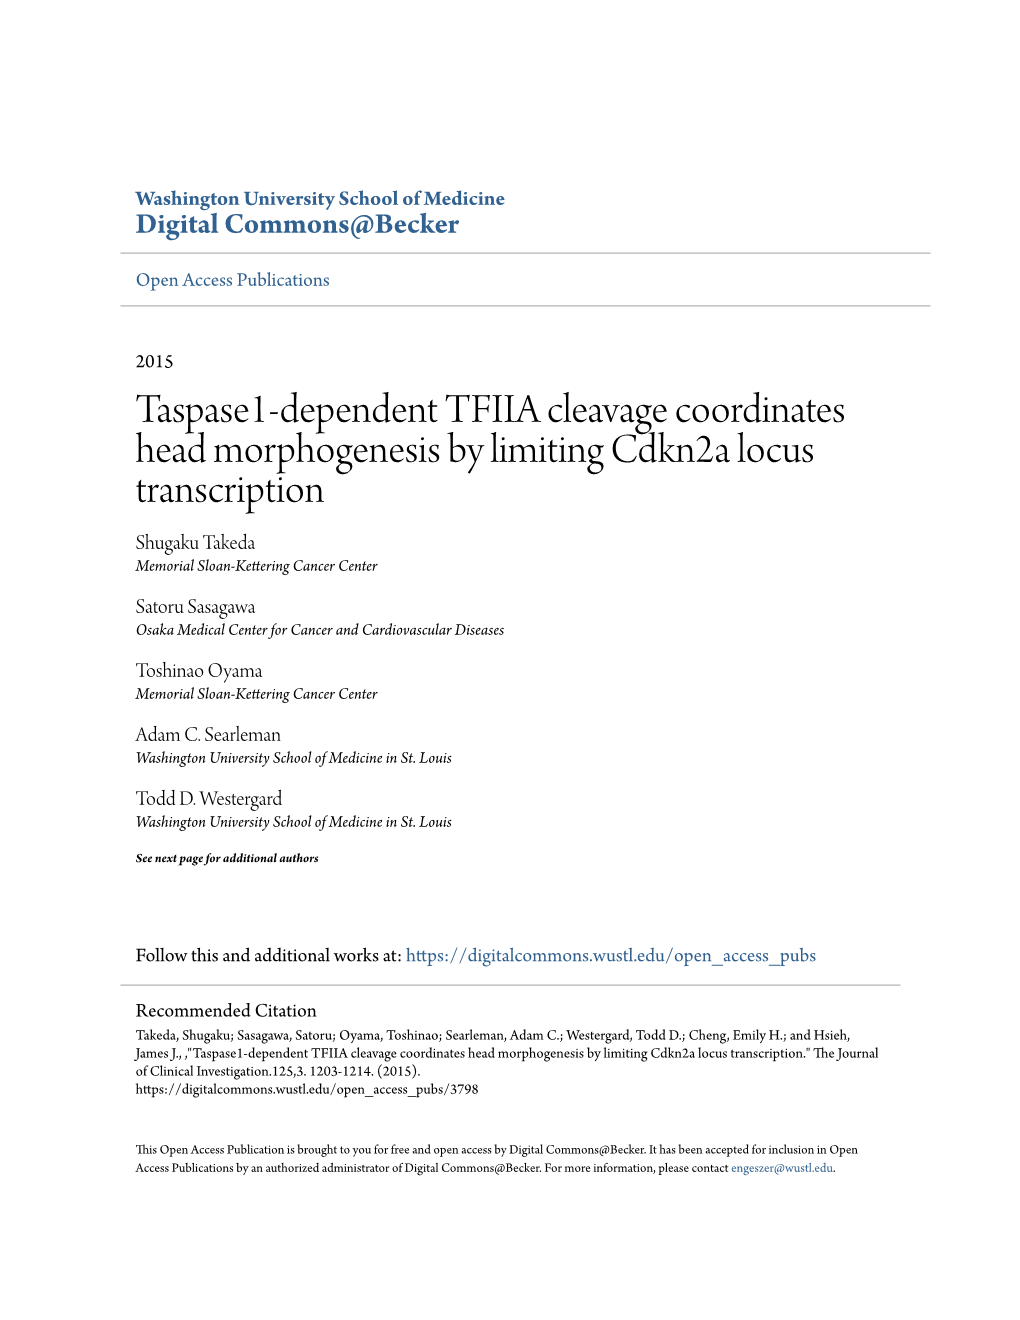 Taspase1-Dependent TFIIA Cleavage Coordinates Head Morphogenesis by Limiting Cdkn2a Locus Transcription Shugaku Takeda Memorial Sloan-Kettering Cancer Center